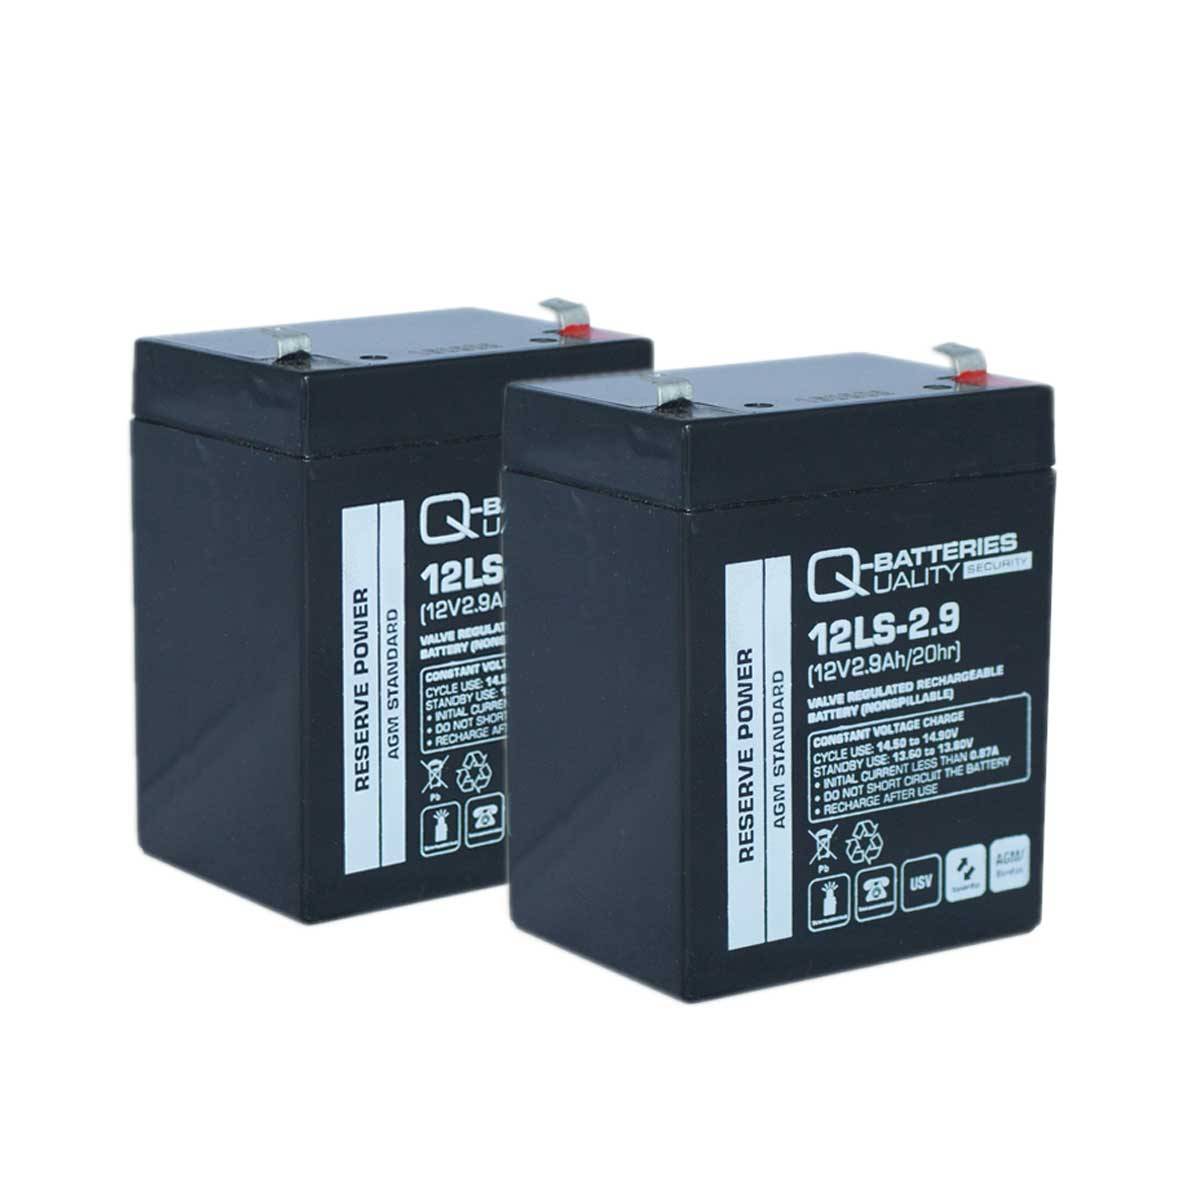 Q-Batteries Batteria di ricambio per sollevatore da bagno e sollevatore di pazienti 24V 2.9Ah (2 x 12V)